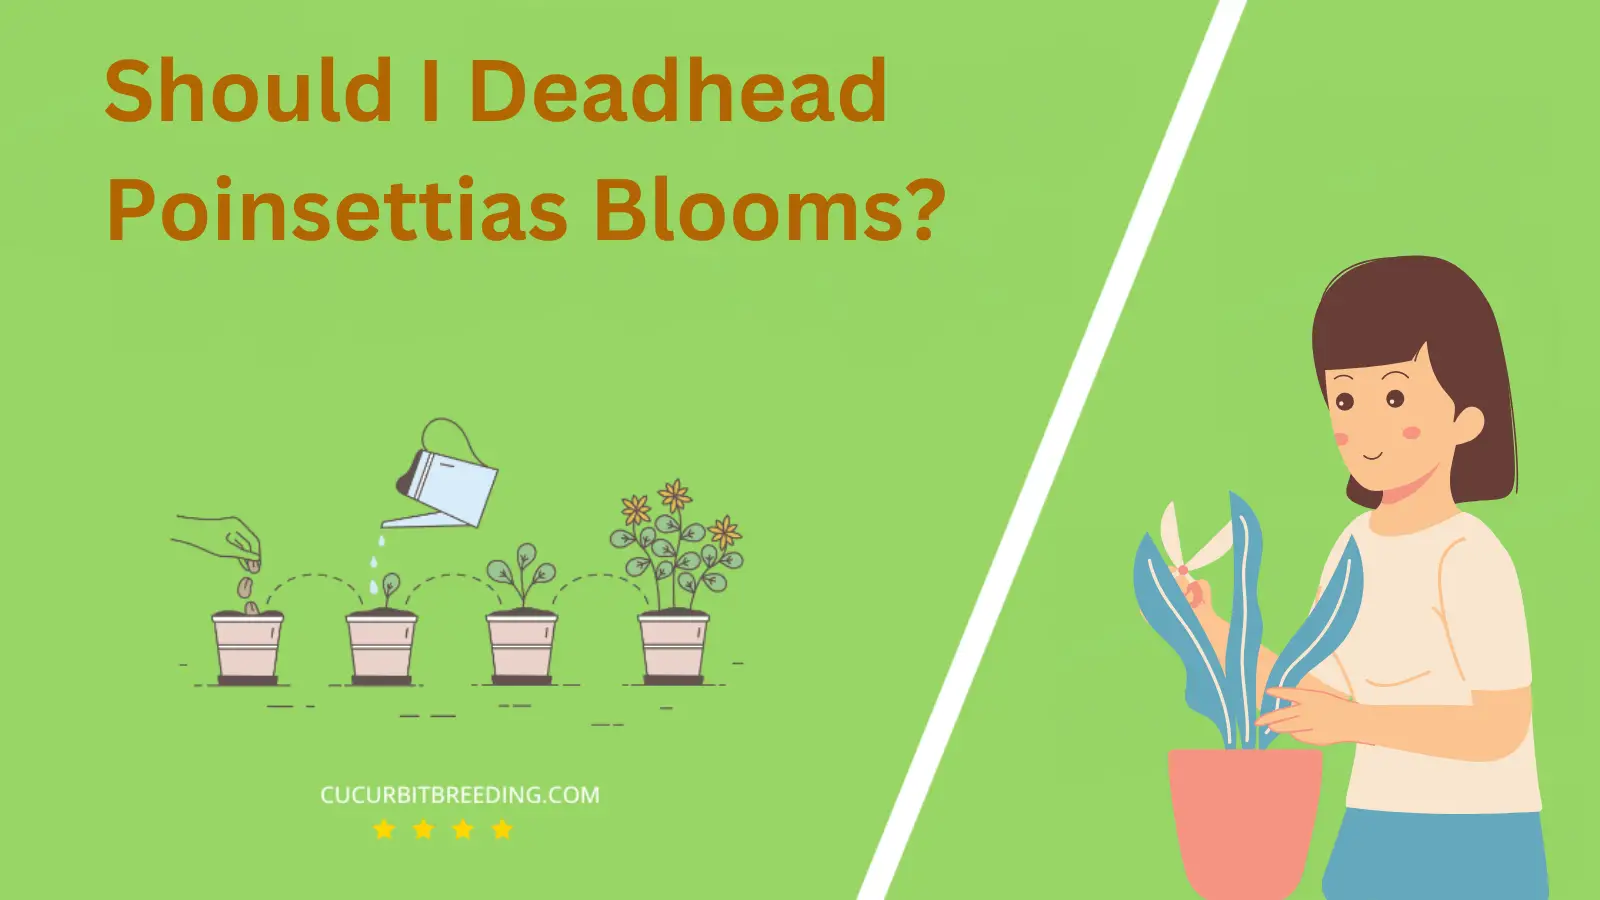 Should I Deadhead Poinsettias Blooms?